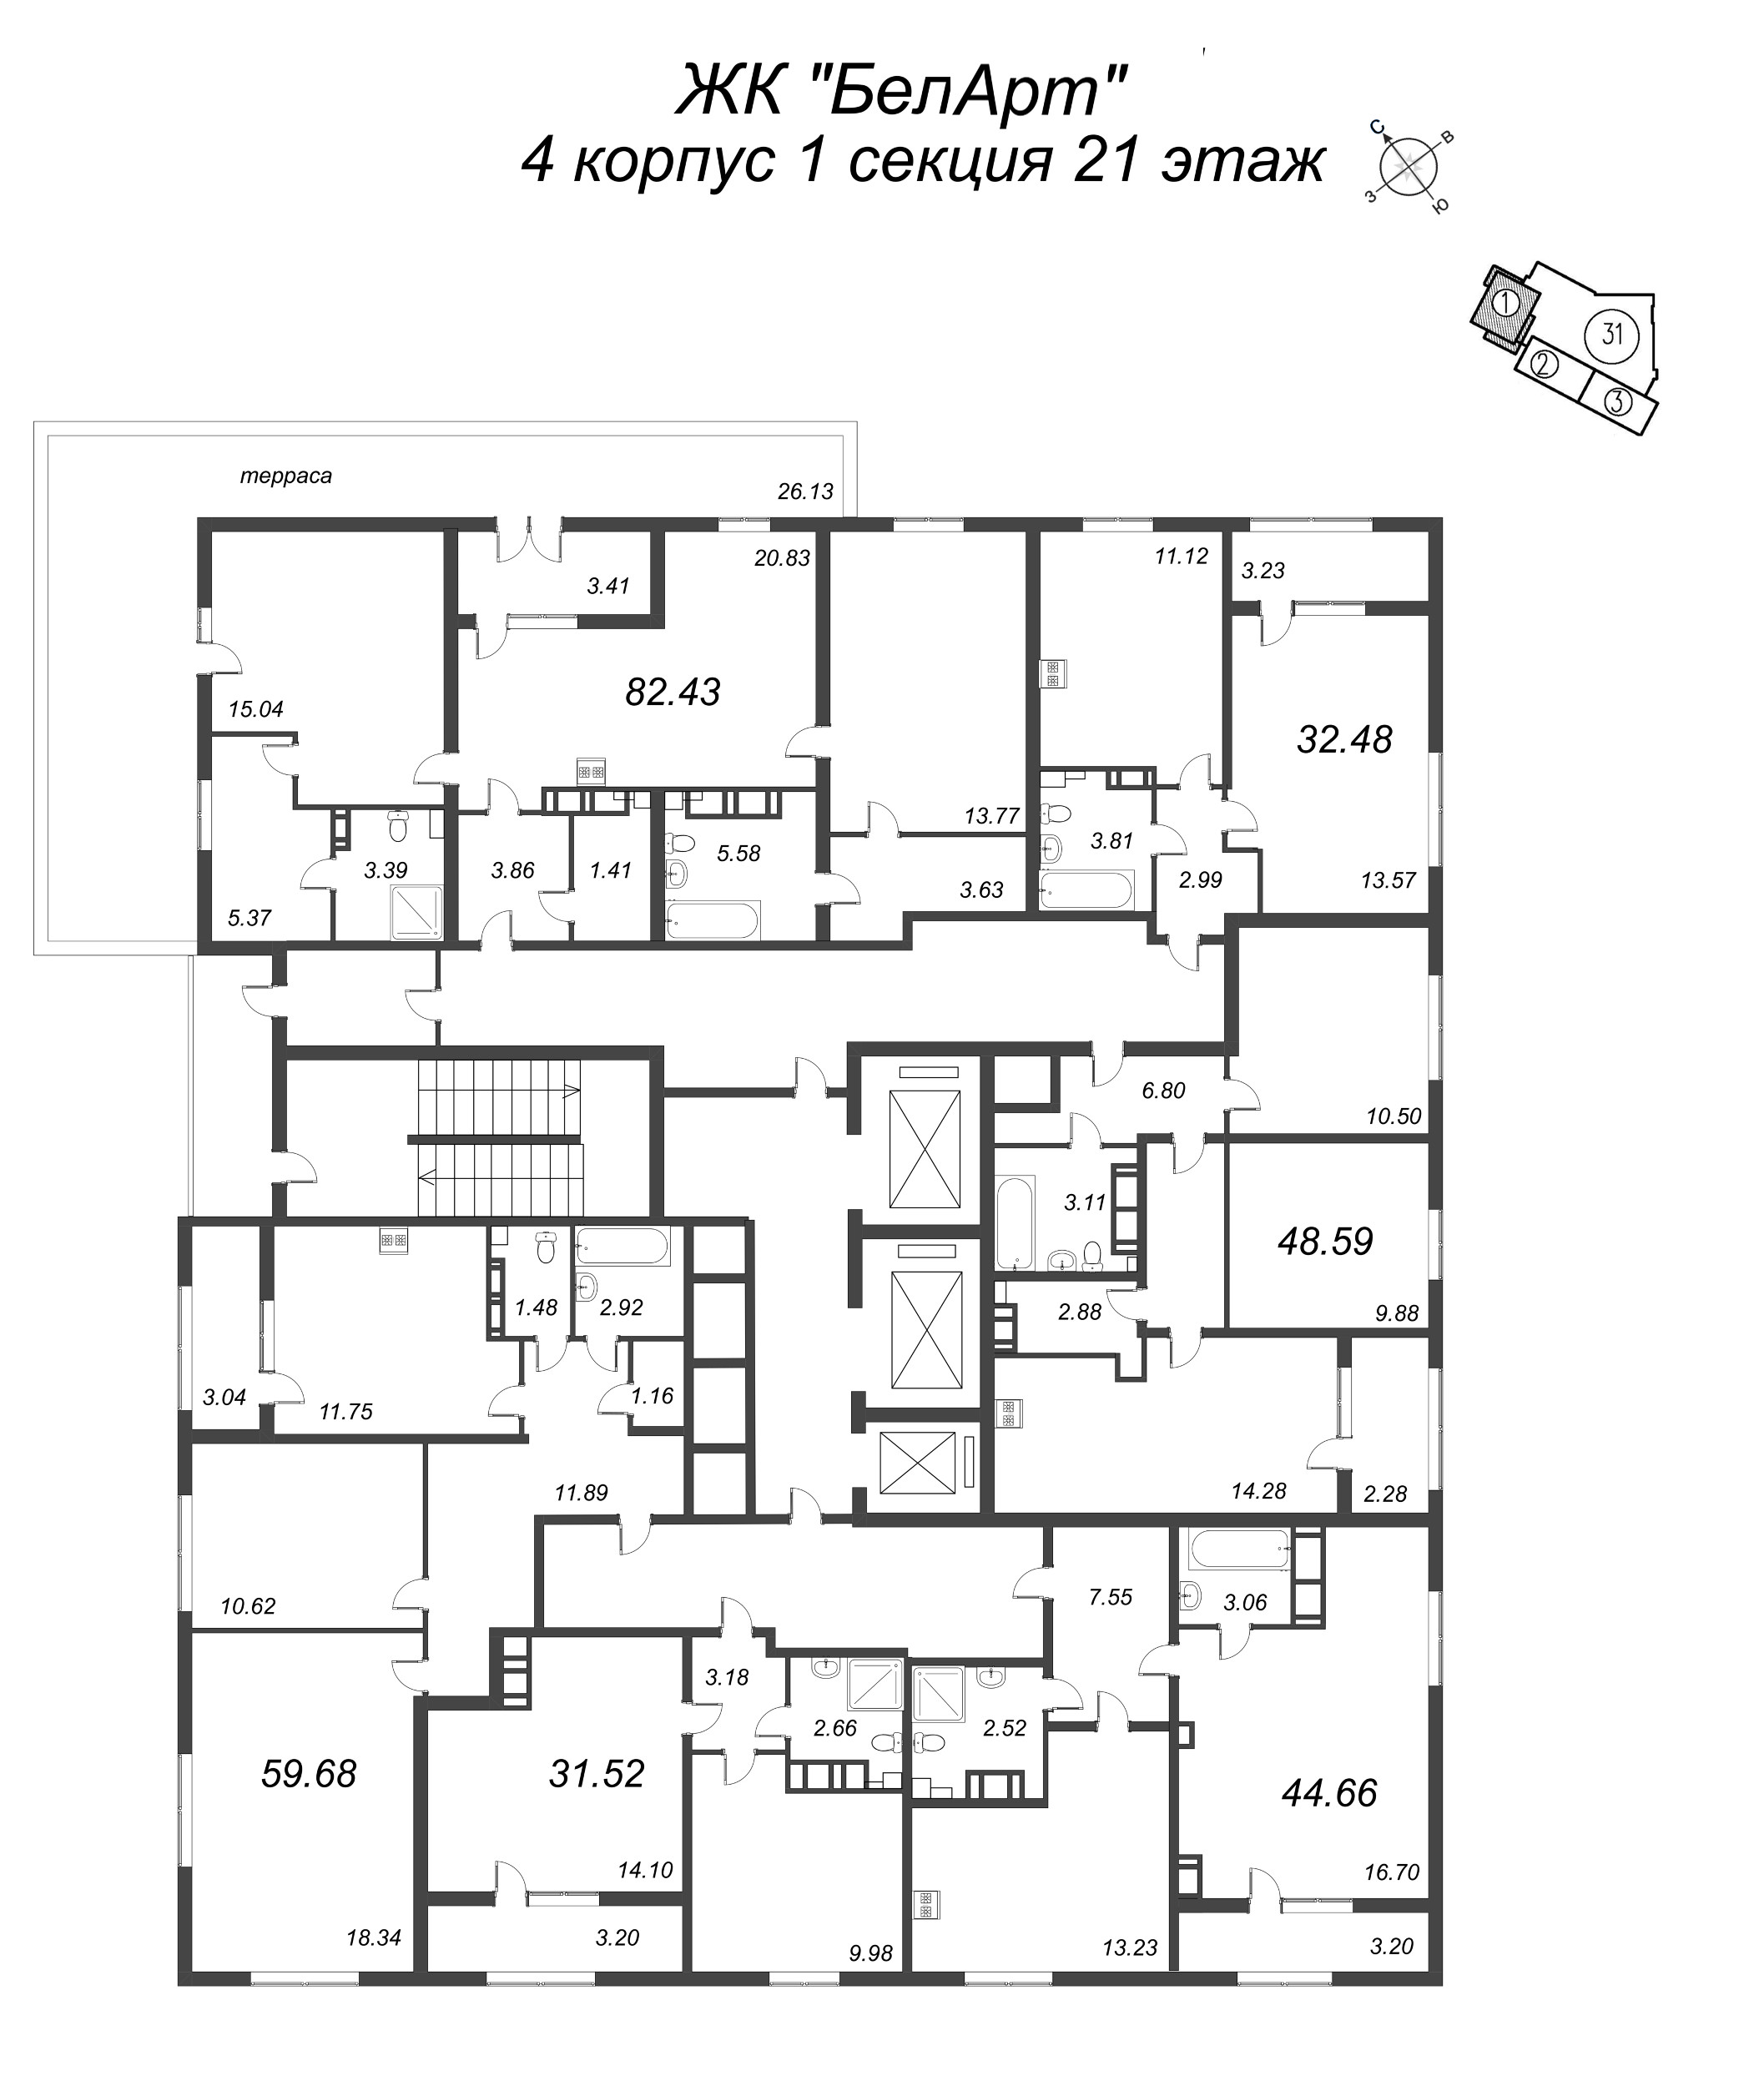 3-комнатная (Евро) квартира, 82.43 м² в ЖК "БелАрт" - планировка этажа